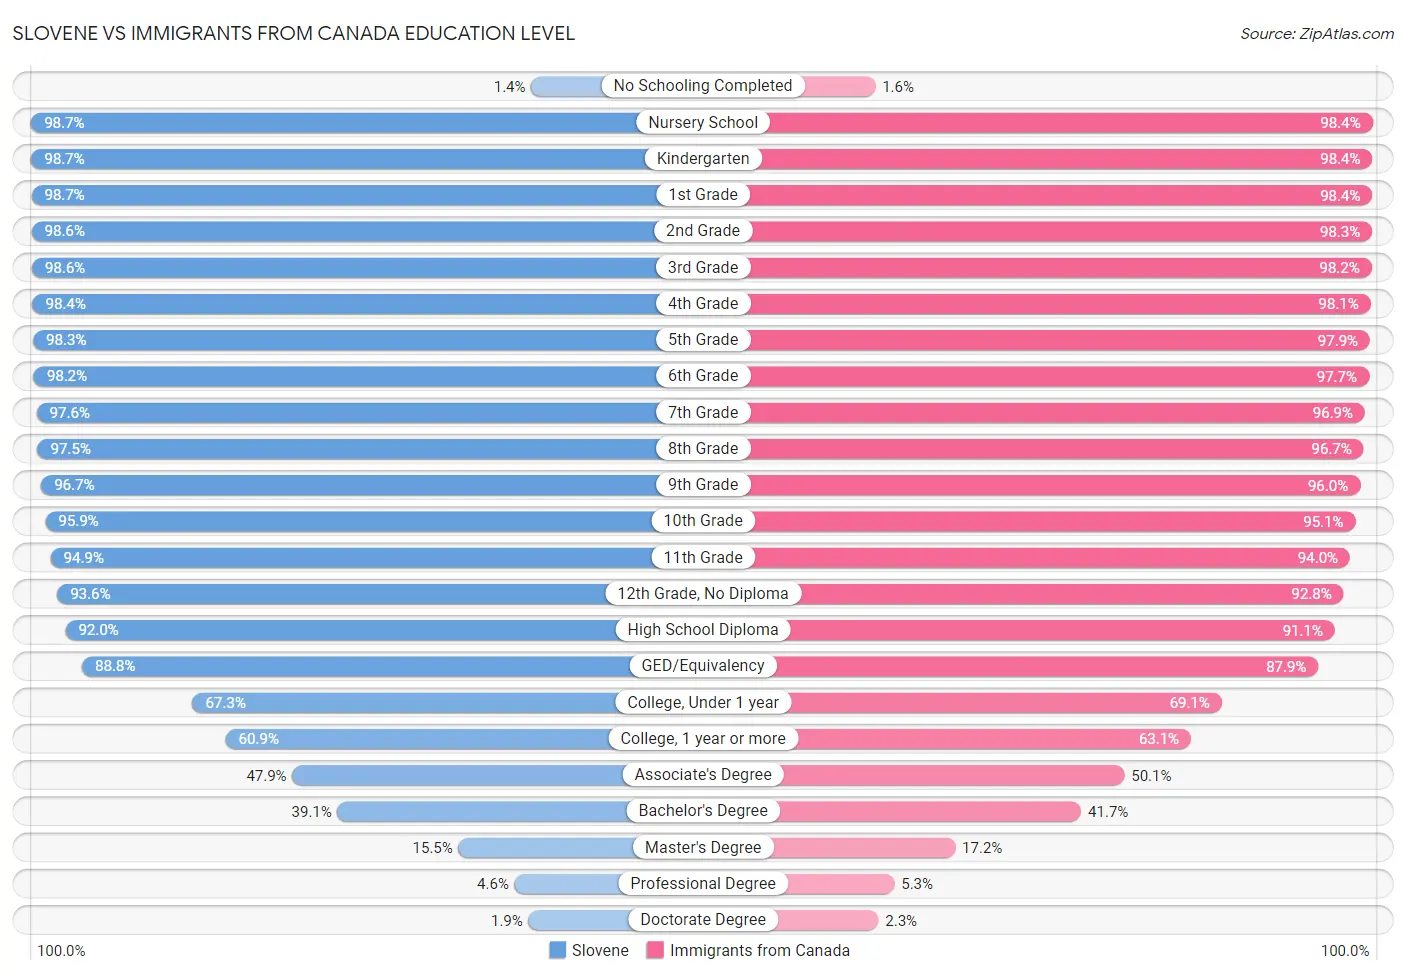 Slovene vs Immigrants from Canada Education Level